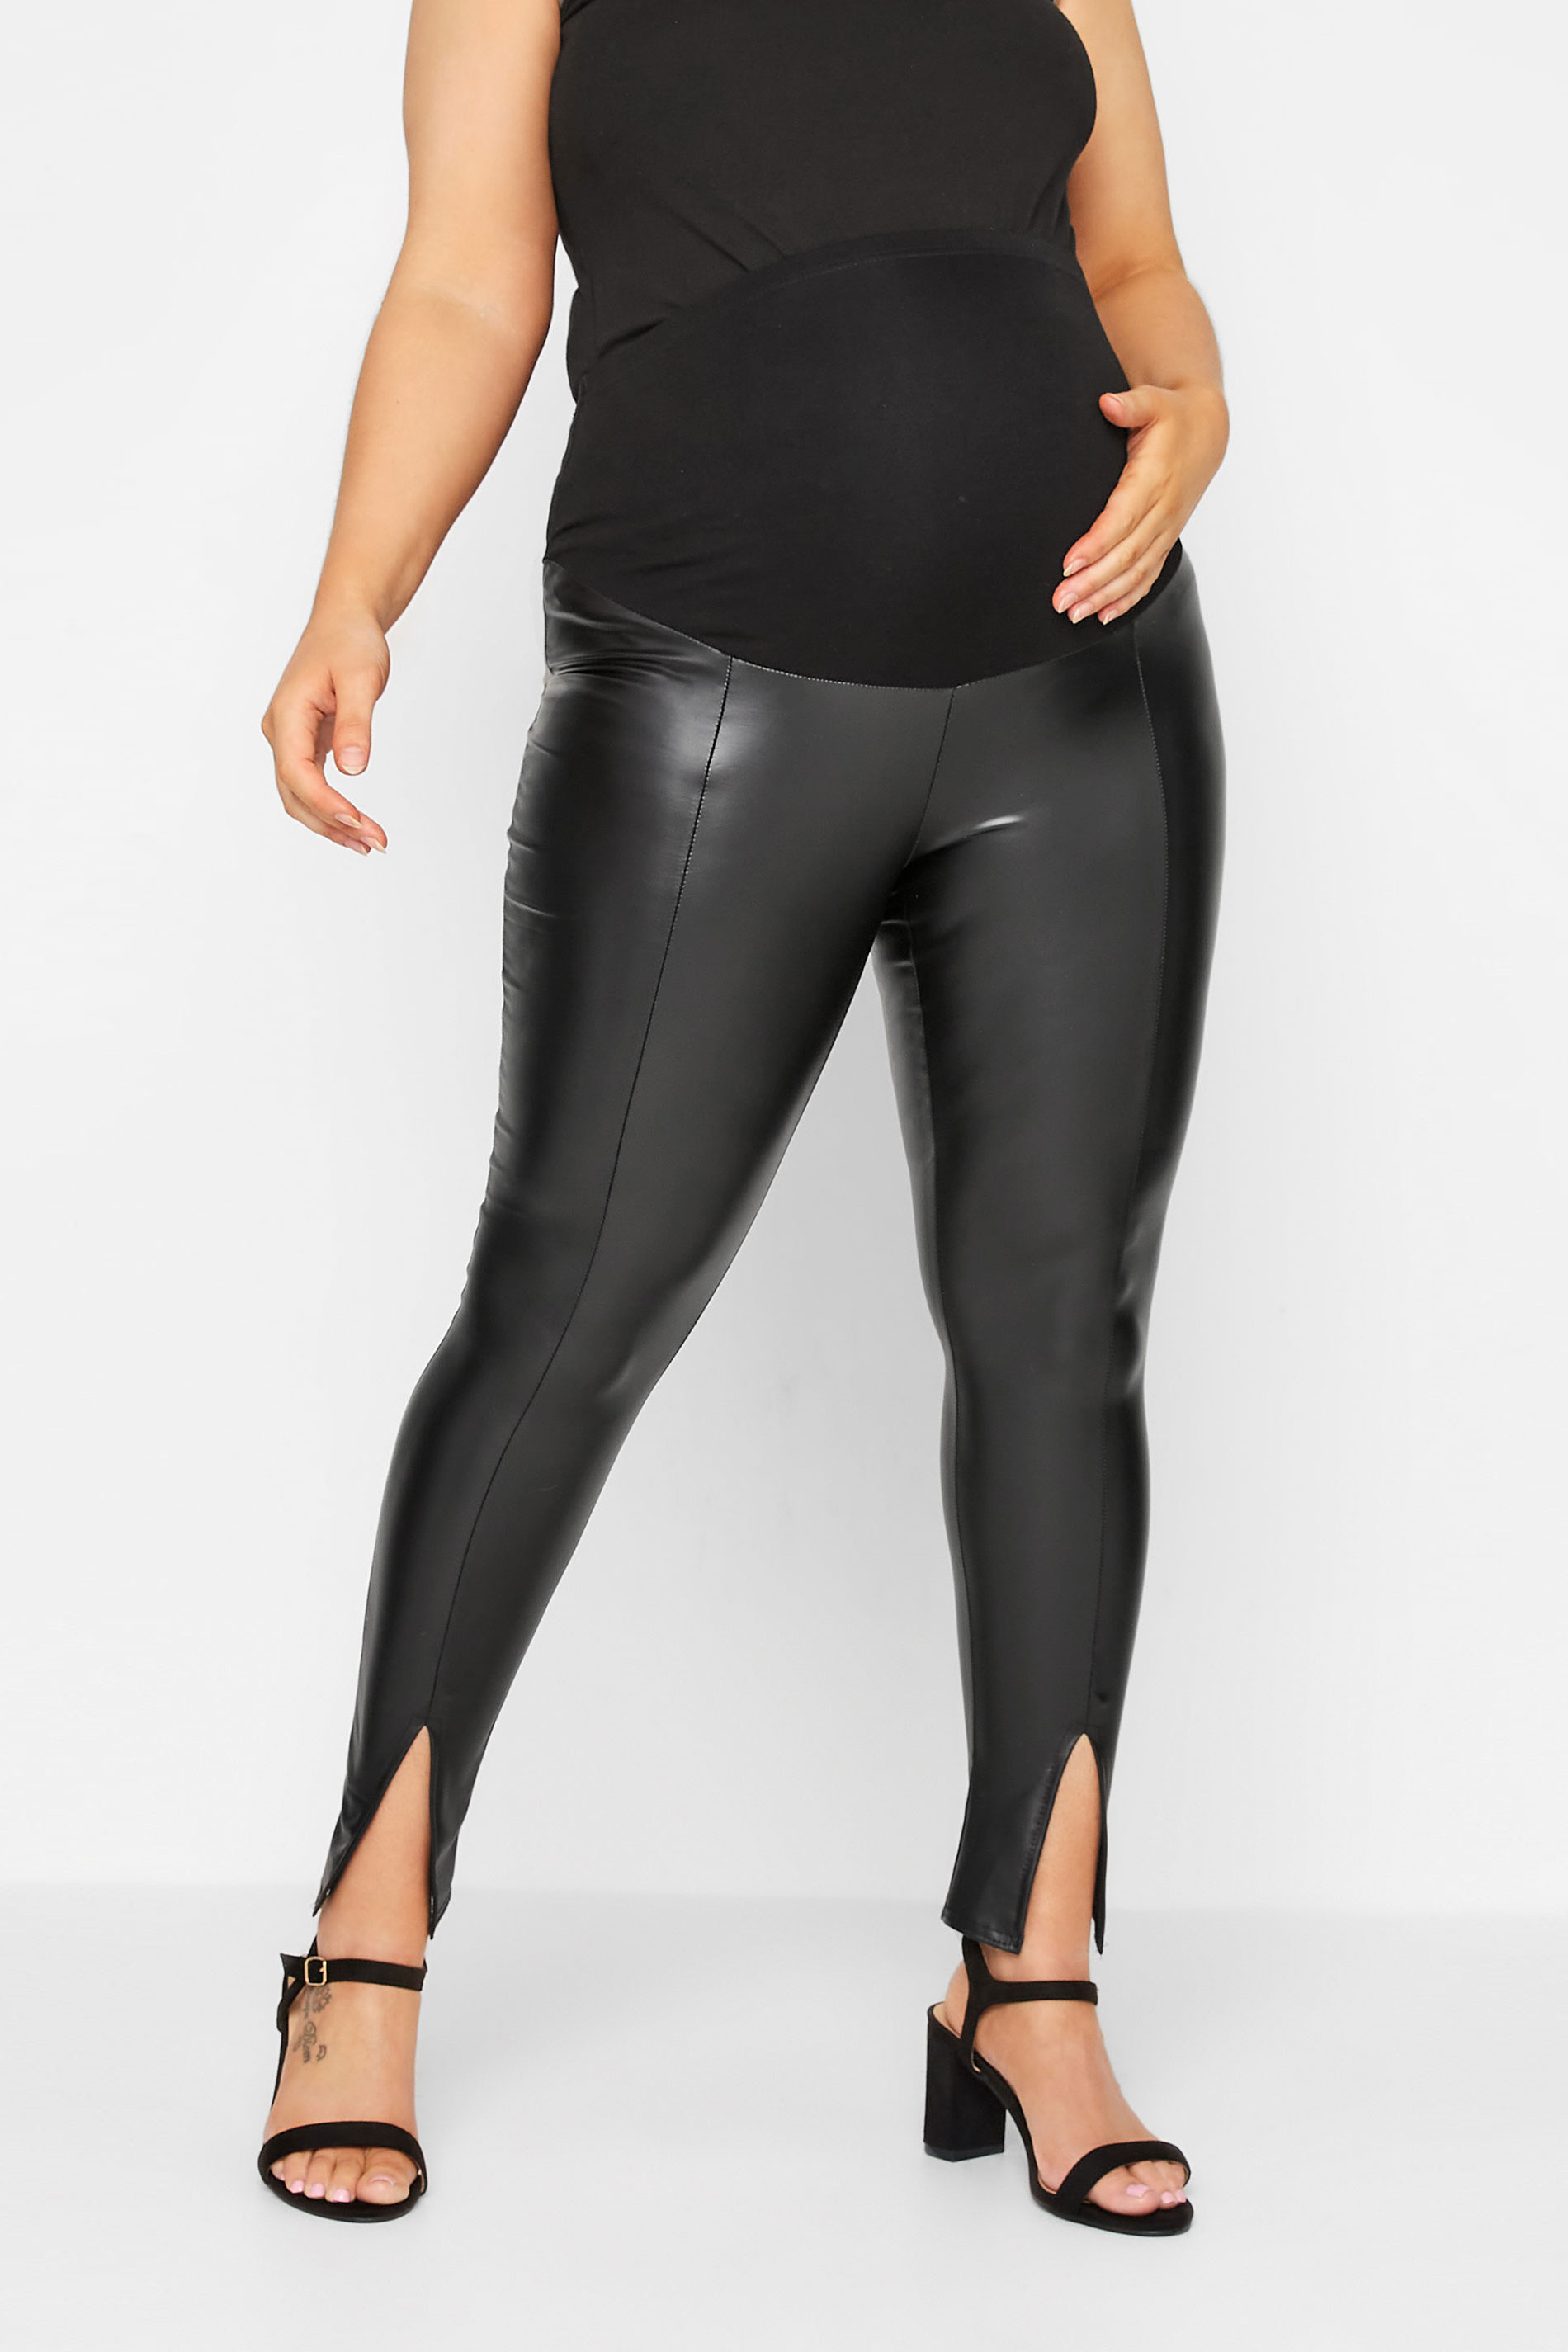 BUMP IT UP MATERNITY Plus Size Black Coated Split Front Leggings | Yours Clothing 1